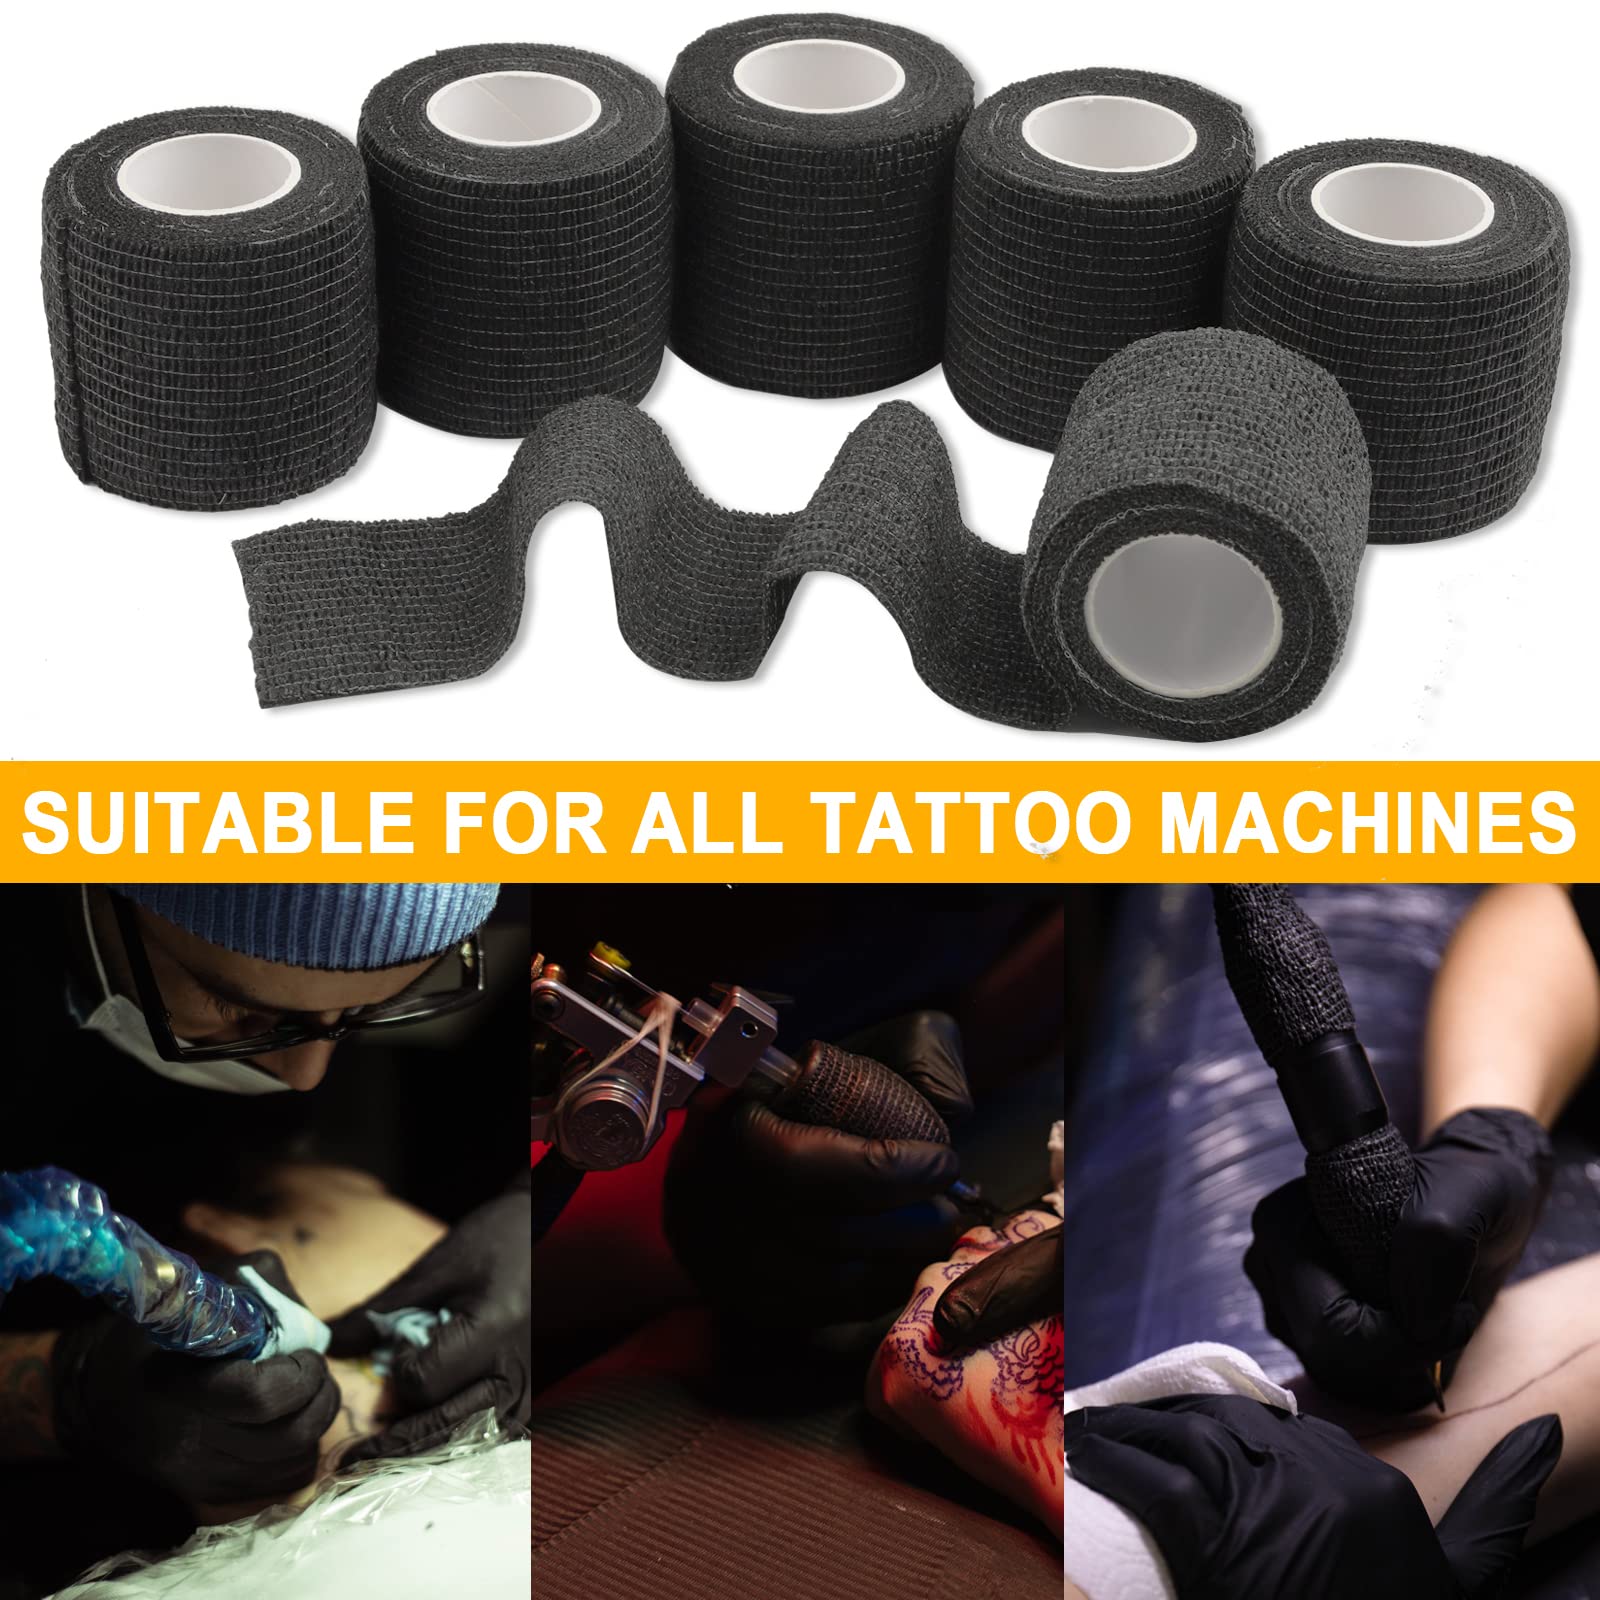 Tattoo Grip Tape - Ruicoo 4pcs Tattoo Grip Wrap Cover Disposable Tape Self-adhesive Bandage 2